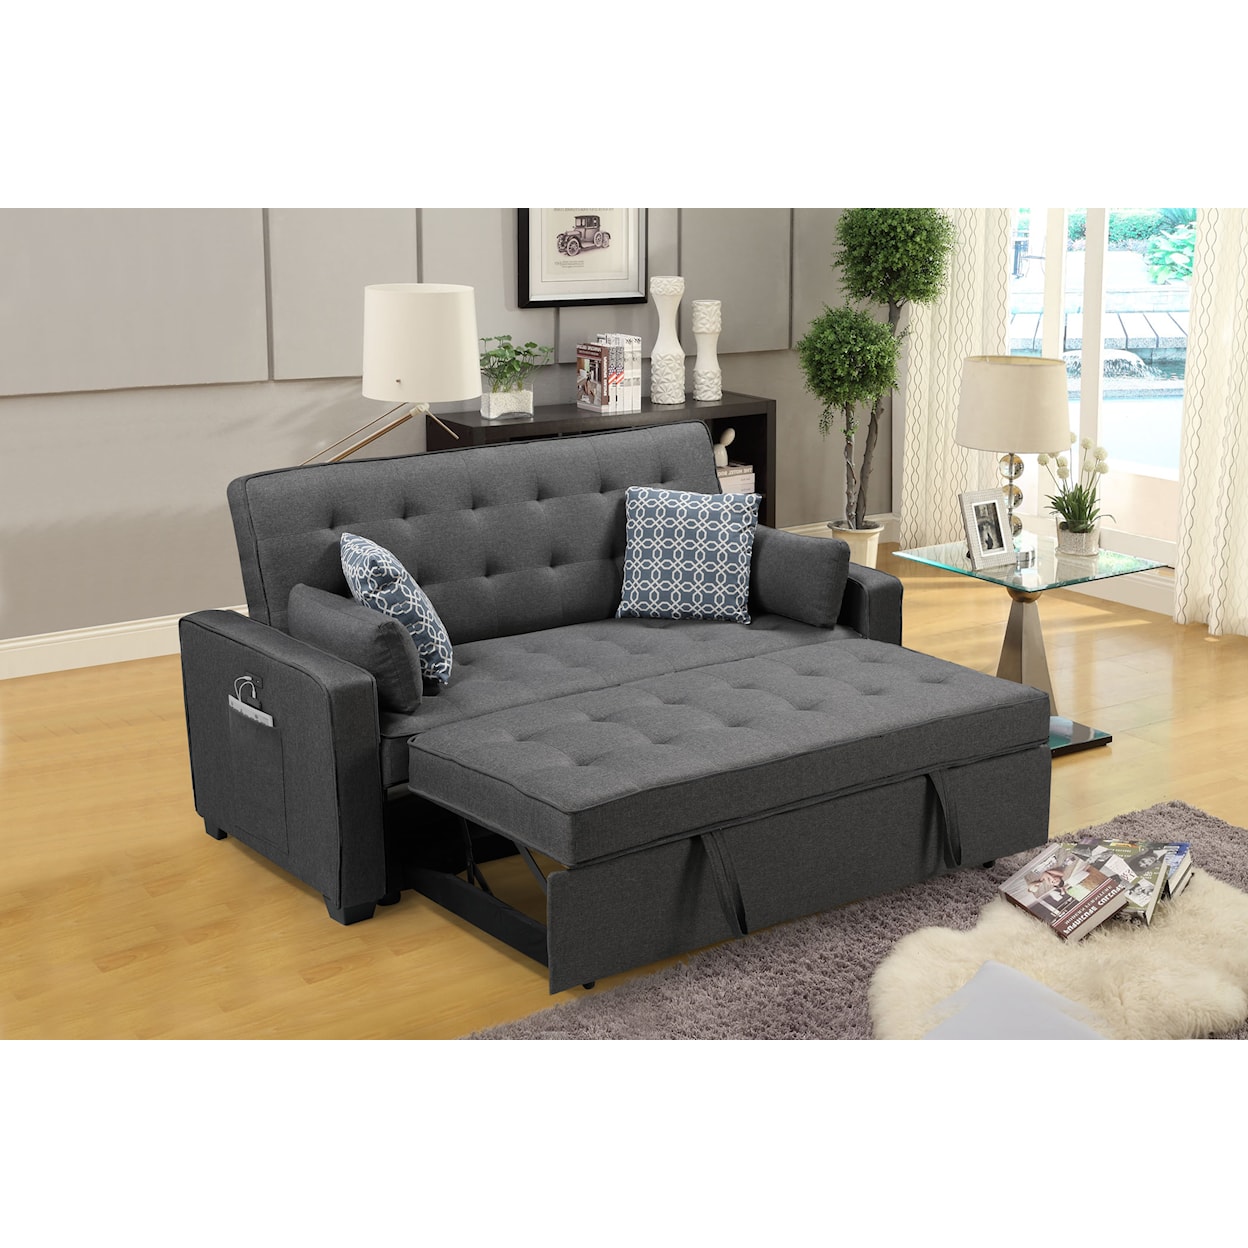 Exclusive William Modern Gray Fabric Sleeper Sofa